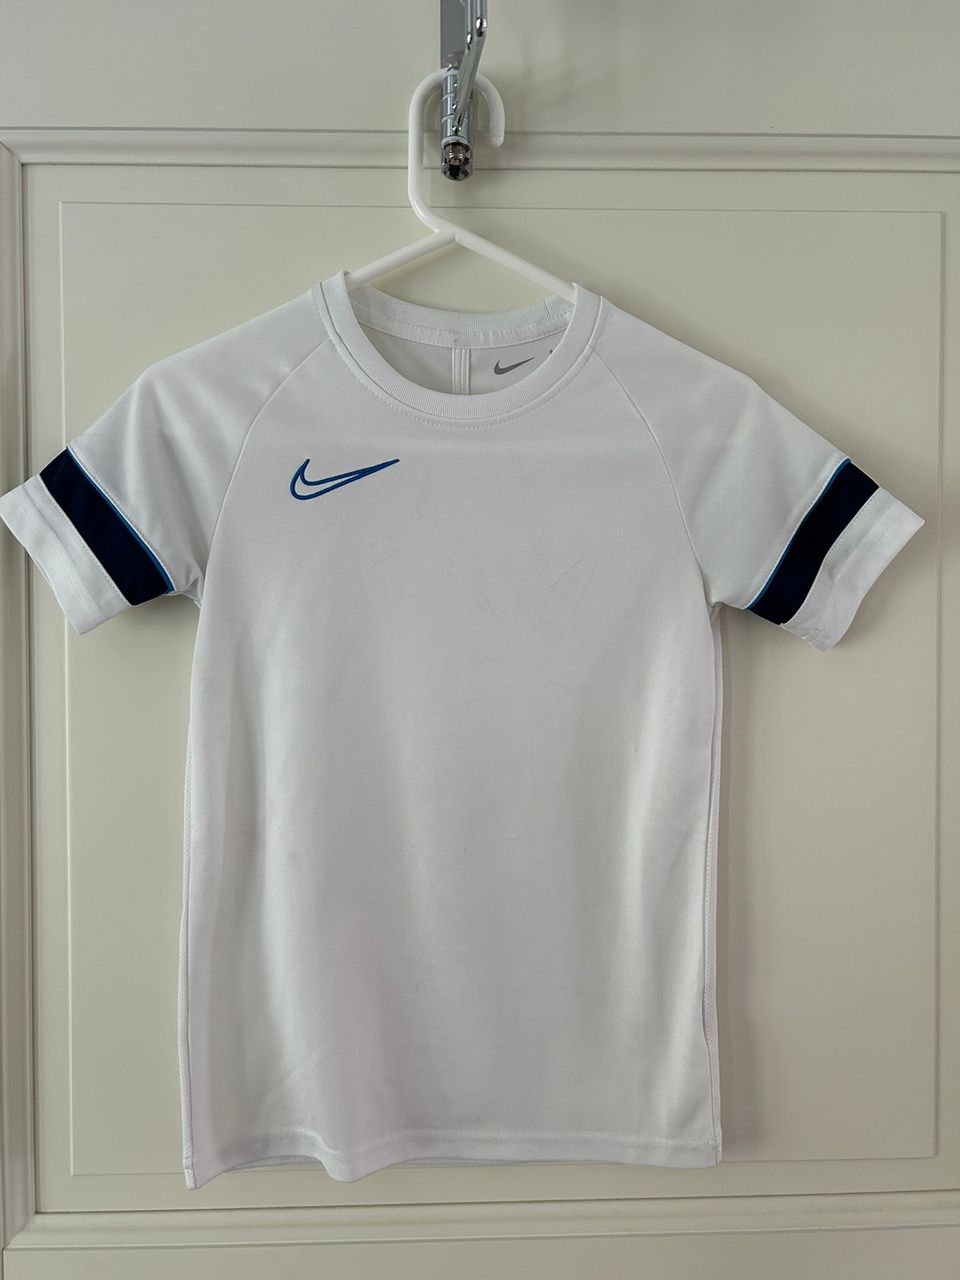 Nike tekninen t-paita 128-137cm